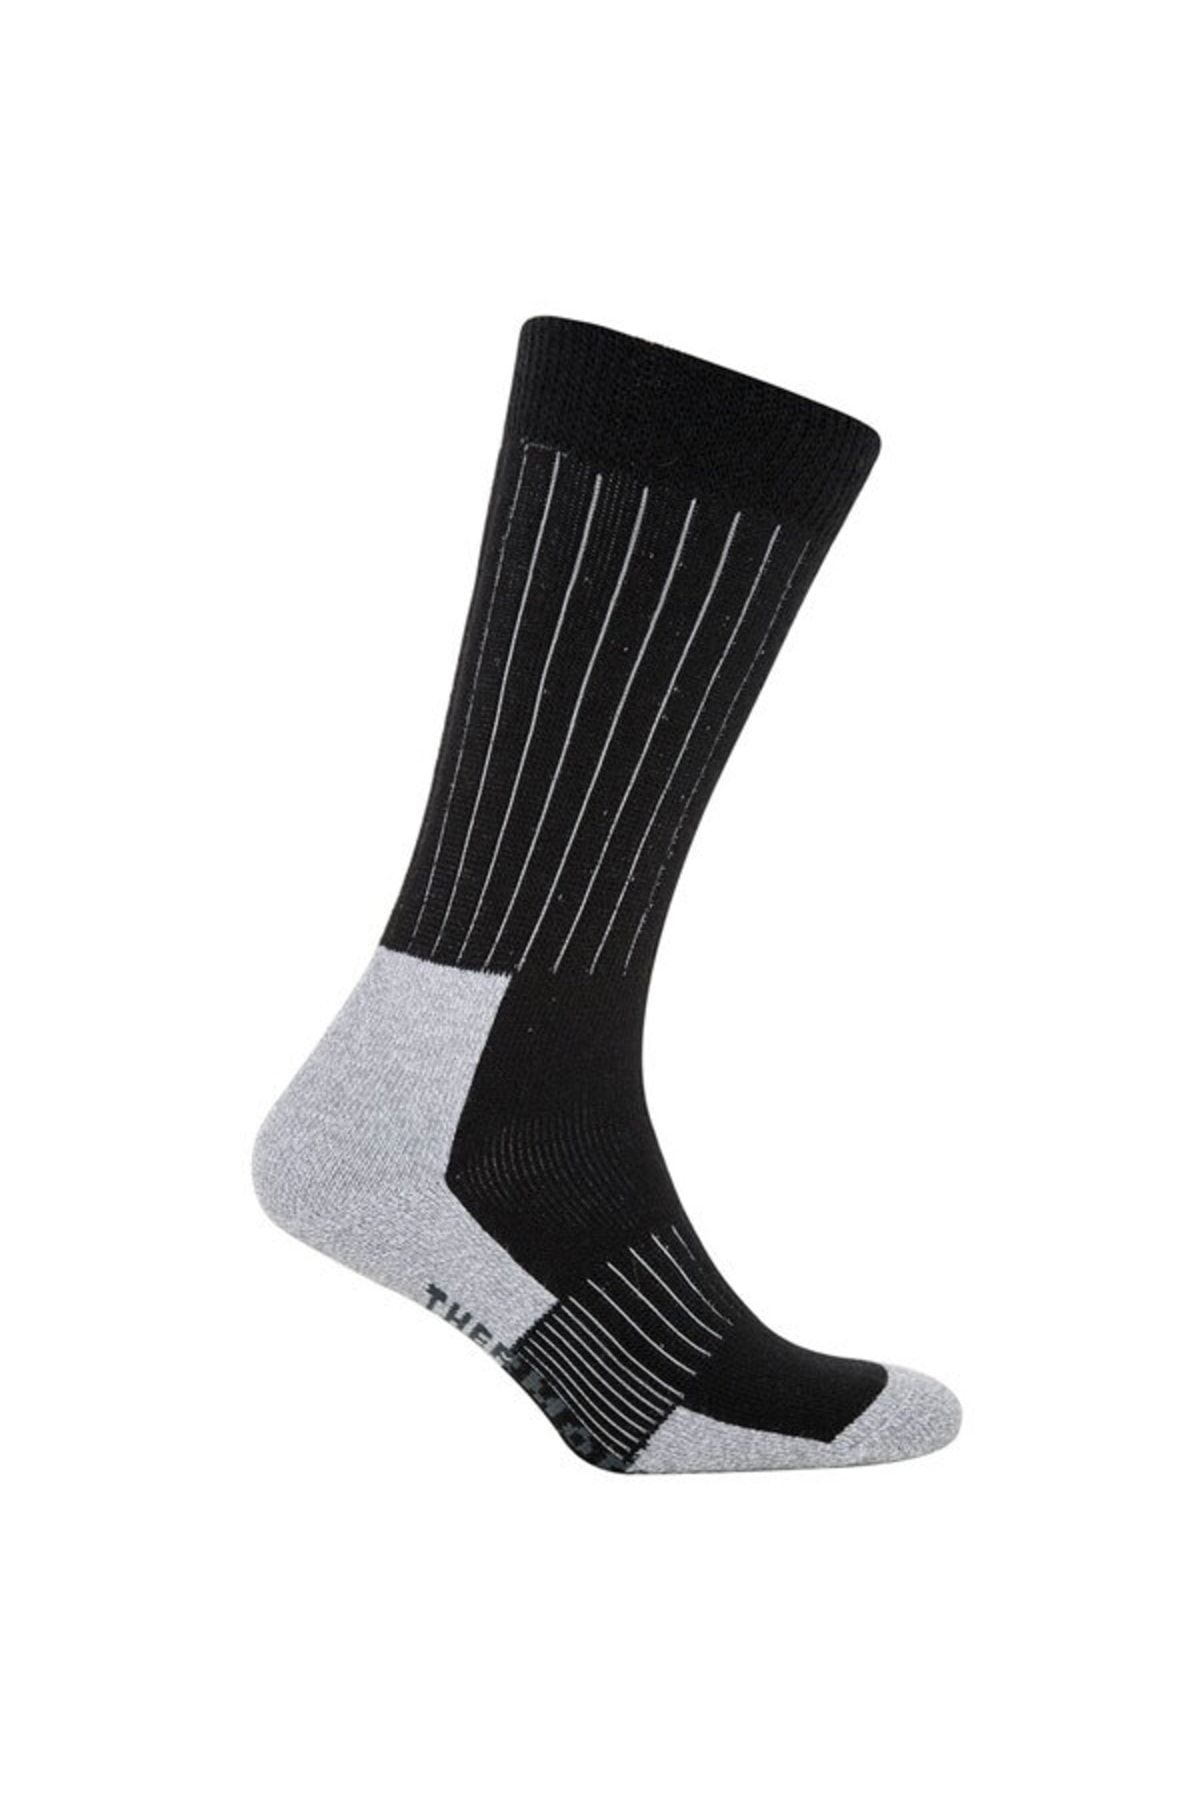 SAVAGE Hzts19 Extreme Çorap Siyah 43-46